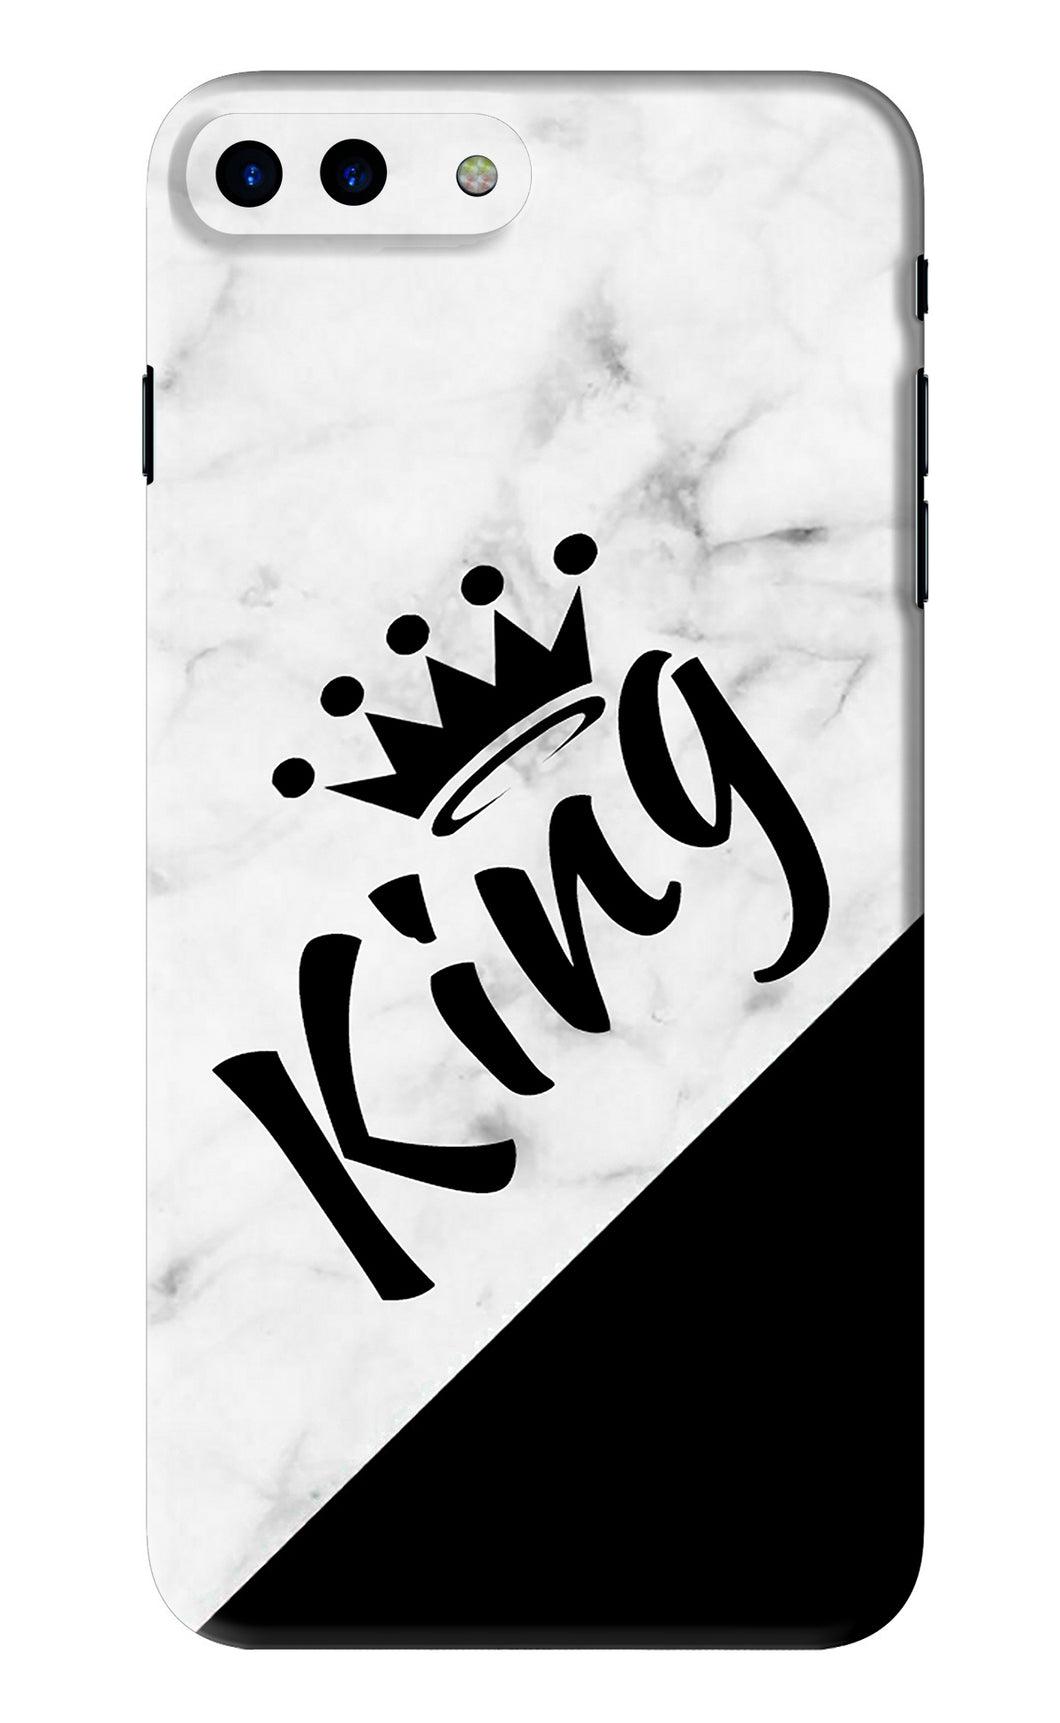 King iPhone 7 Plus Back Skin Wrap